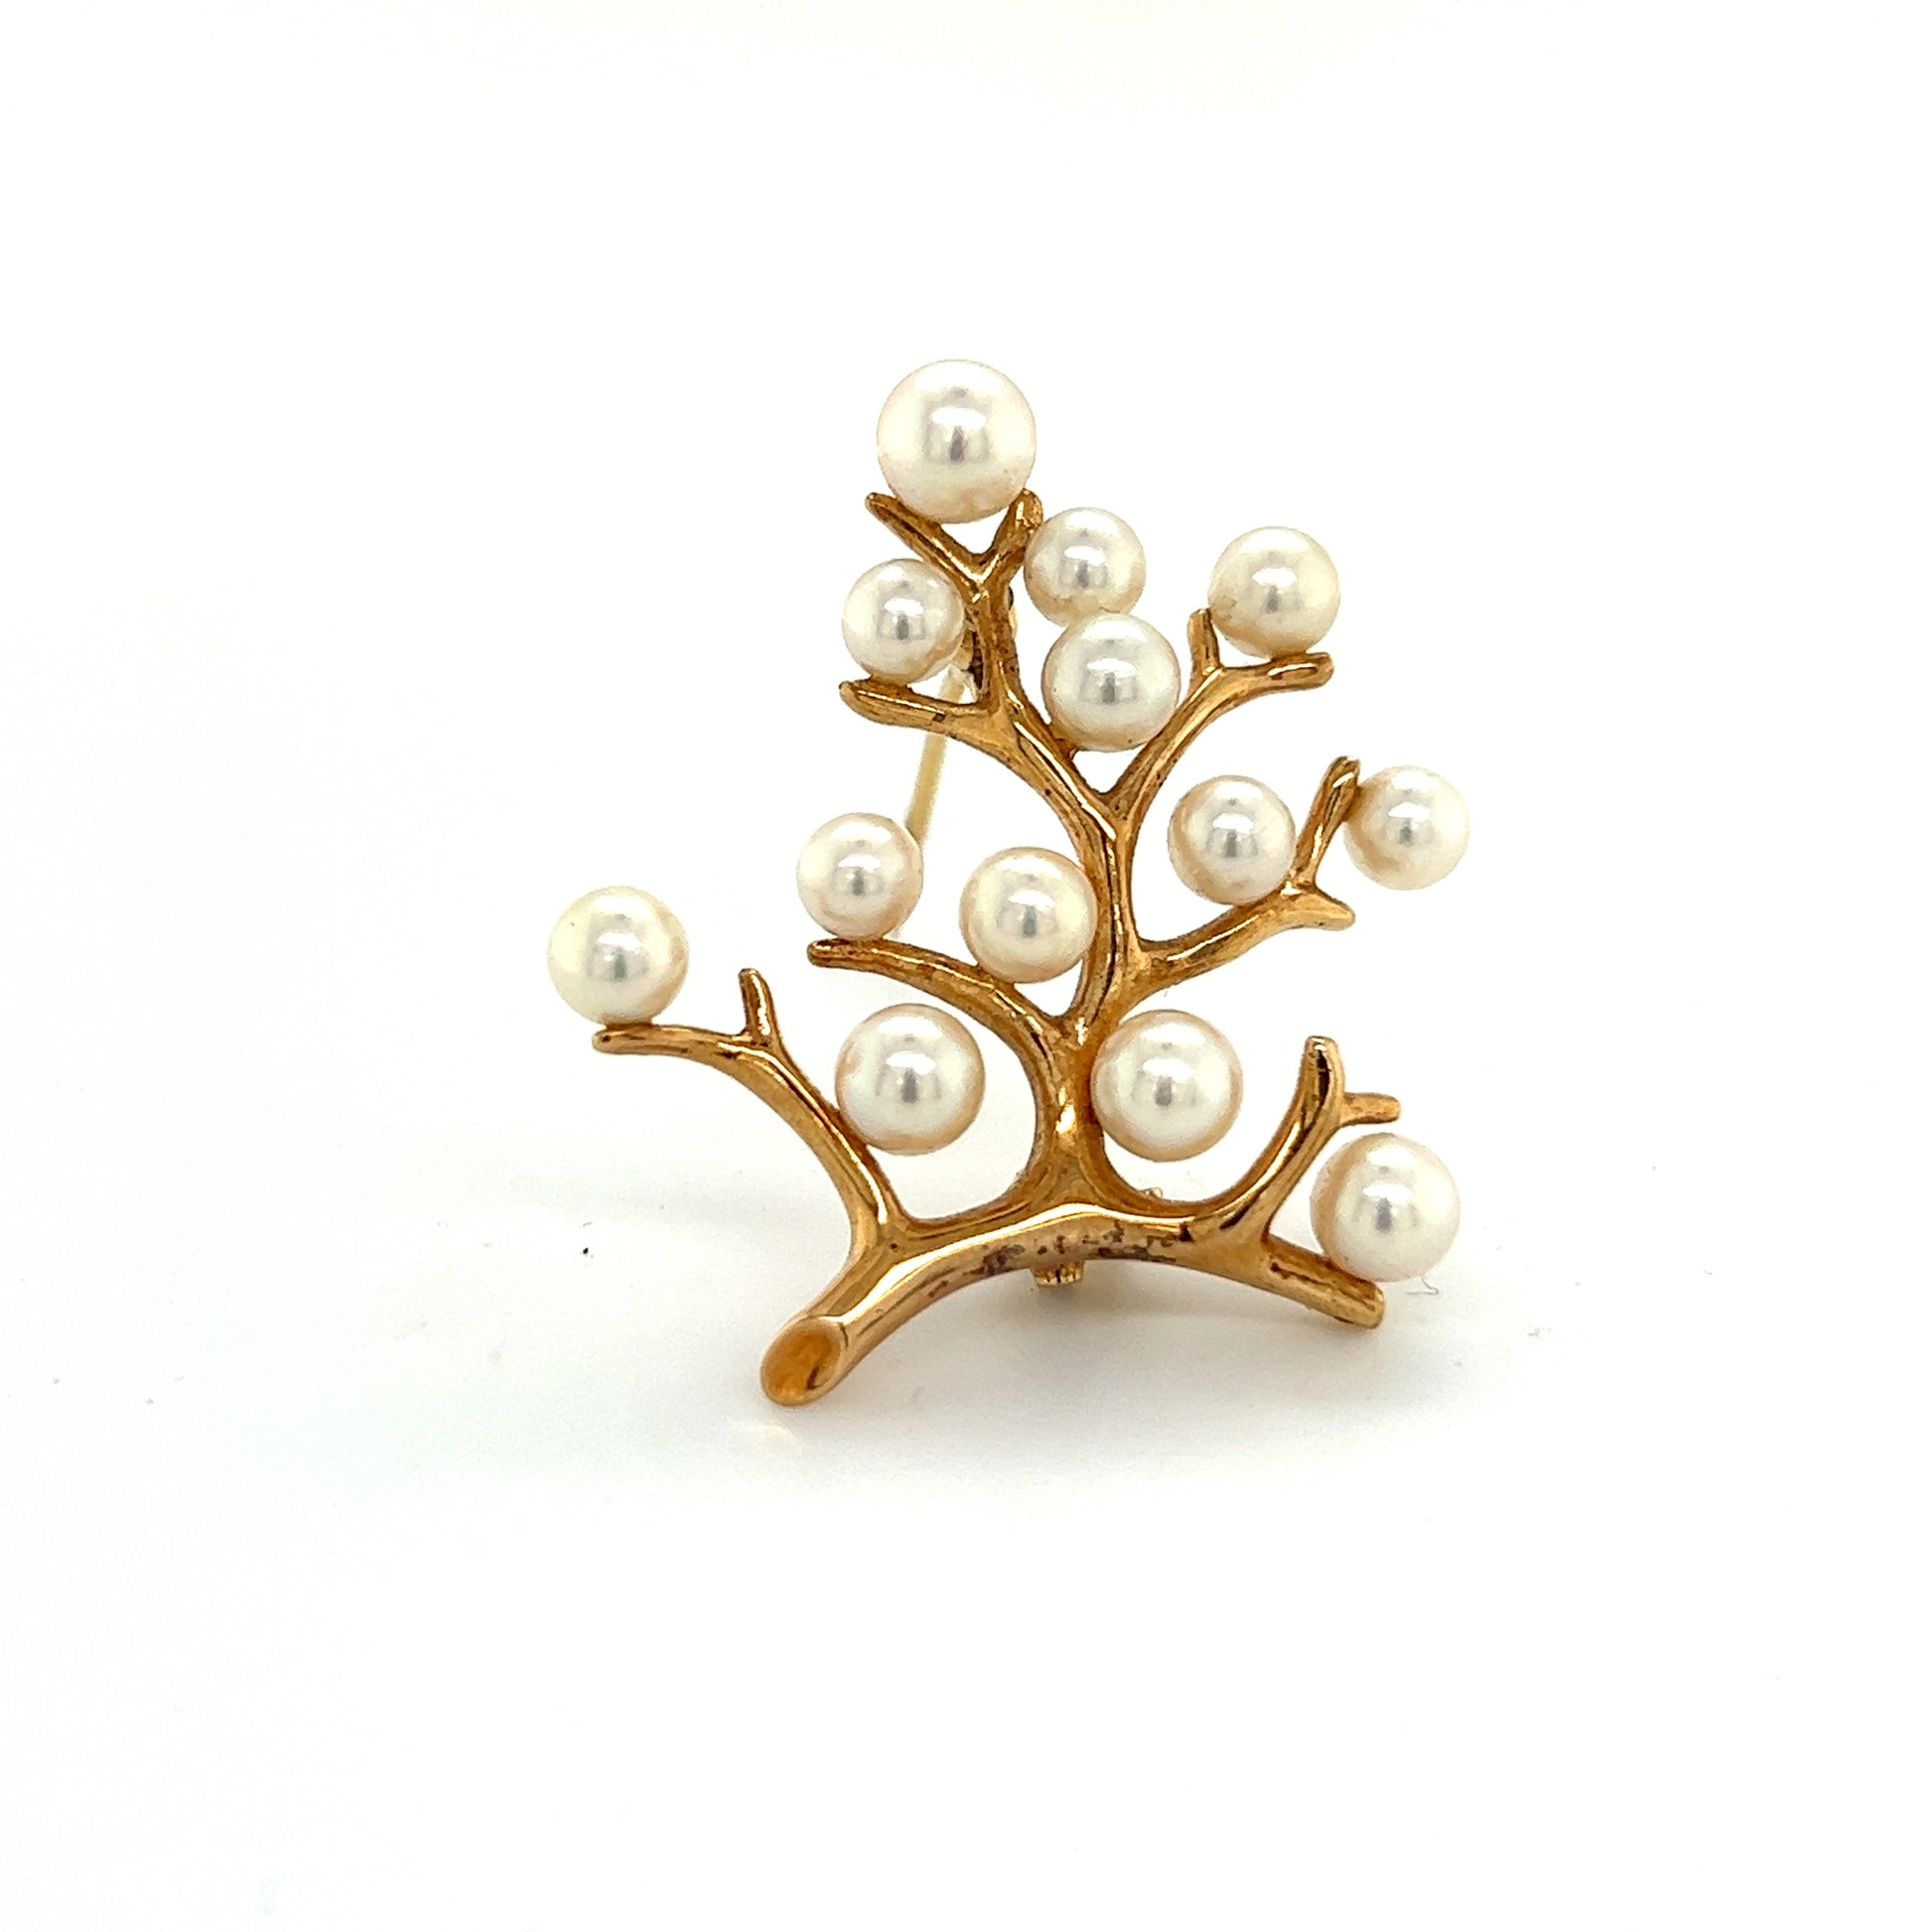 Mikimoto Estate Akoya Pearl Tree of Life Brooch 14k Gold M317 - Certified Fine Jewelry